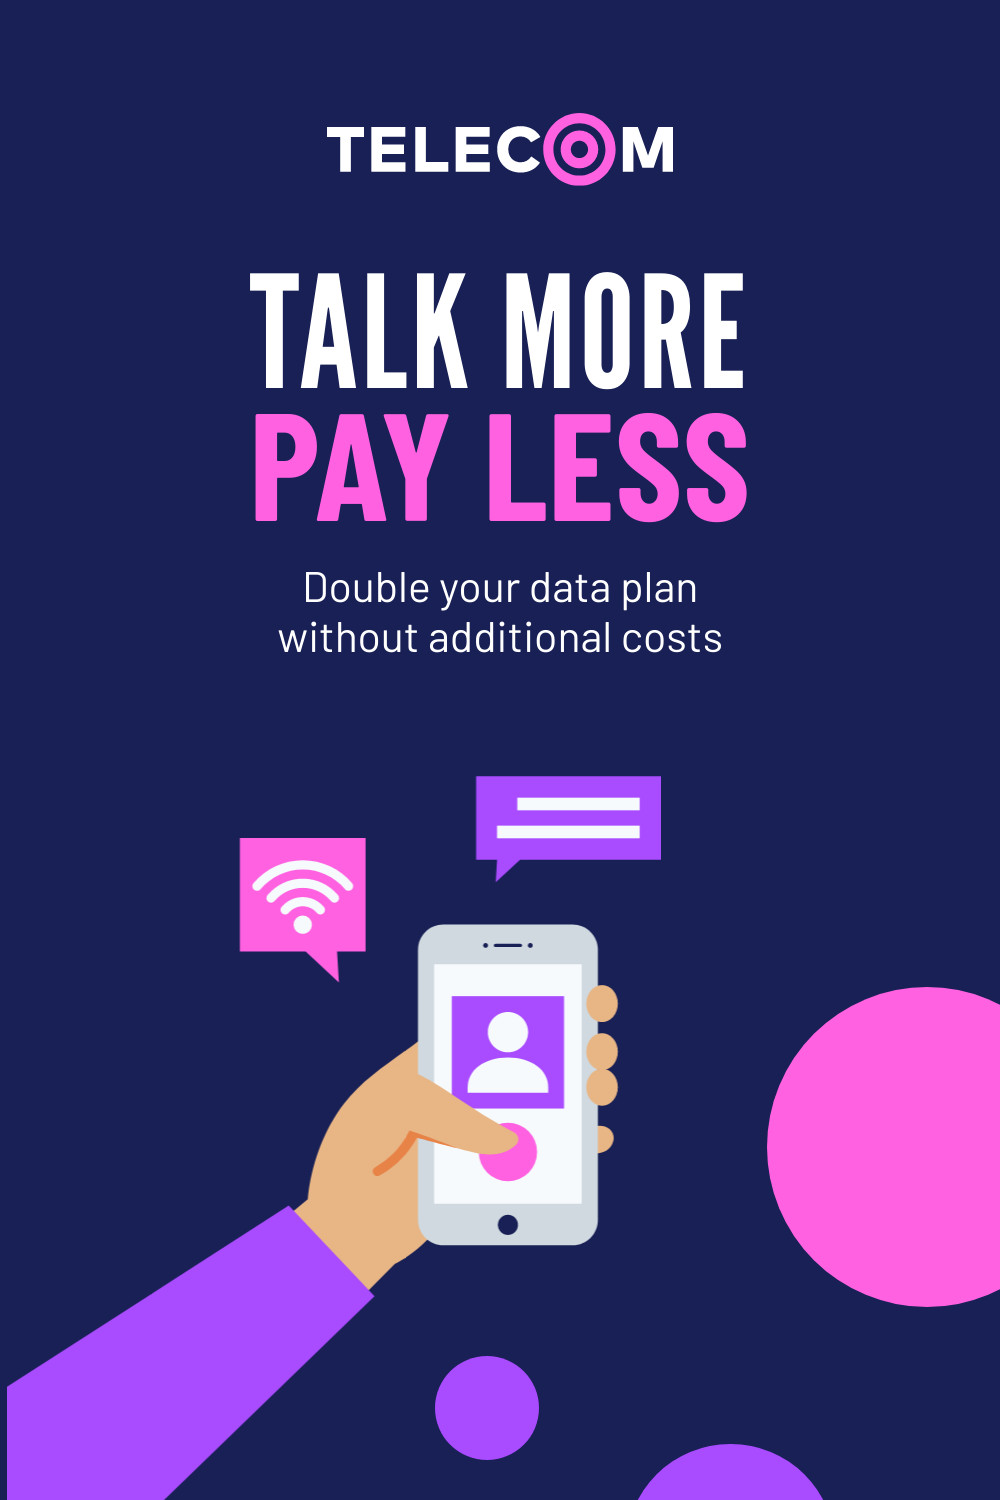 Talk More Pay Less Telecom Plan Inline Rectangle 300x250